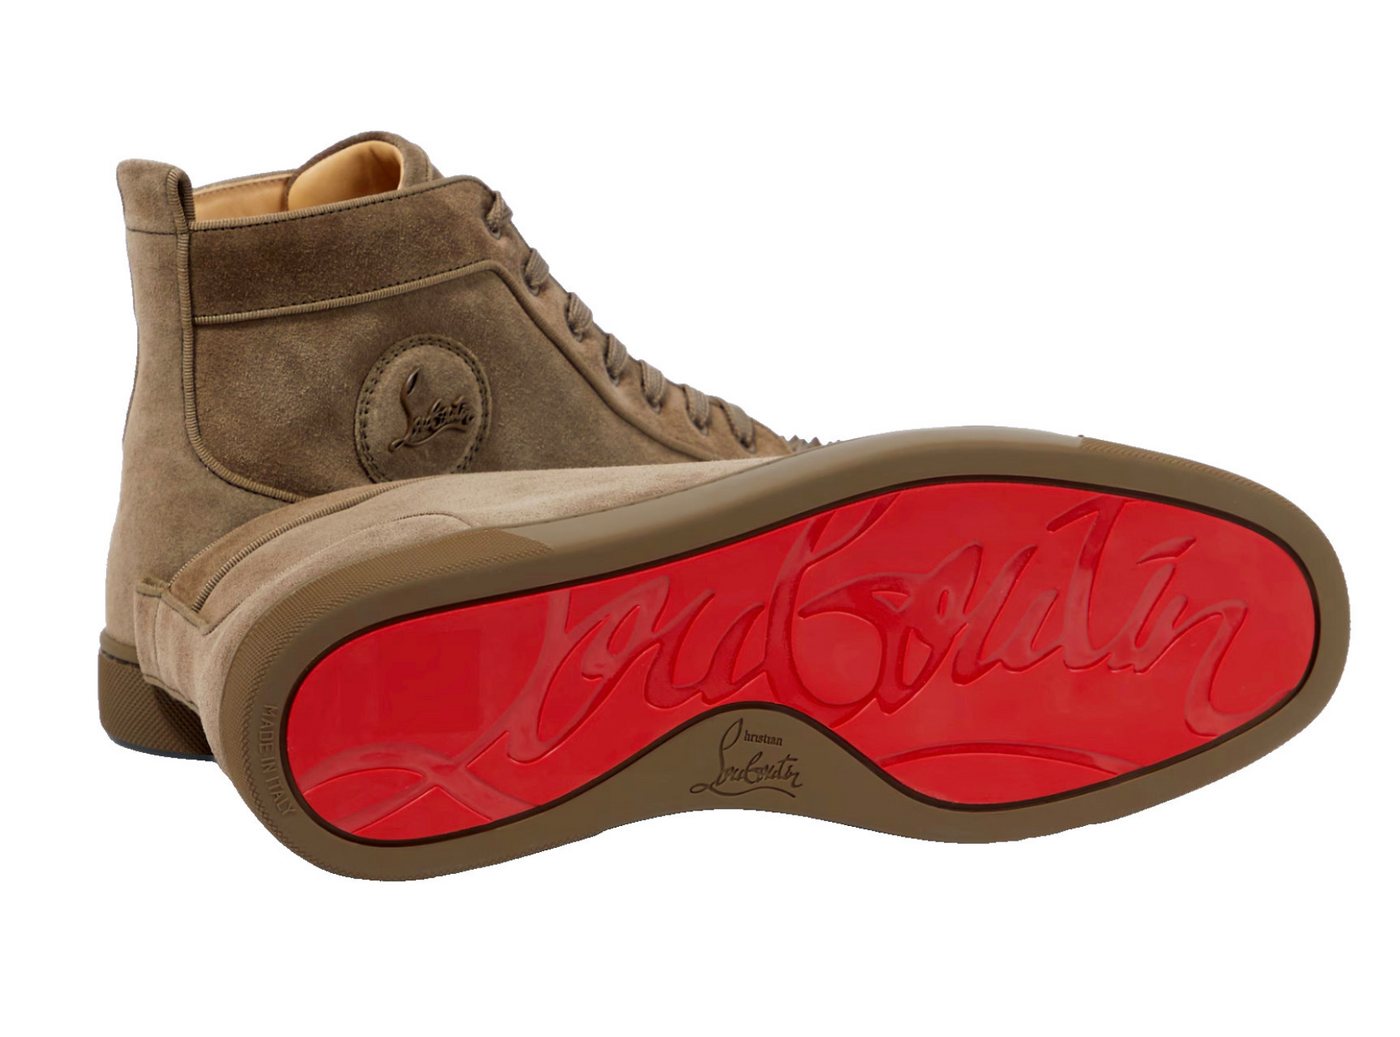 CHRISTIAN LOUBOUTIN Sneakers Louis Spikes Flat Suede Schuhe High Top Suede Turnschuhe Sneaker Signatur rote Gummisohle, mit Spike-Verzierungen von CHRISTIAN LOUBOUTIN